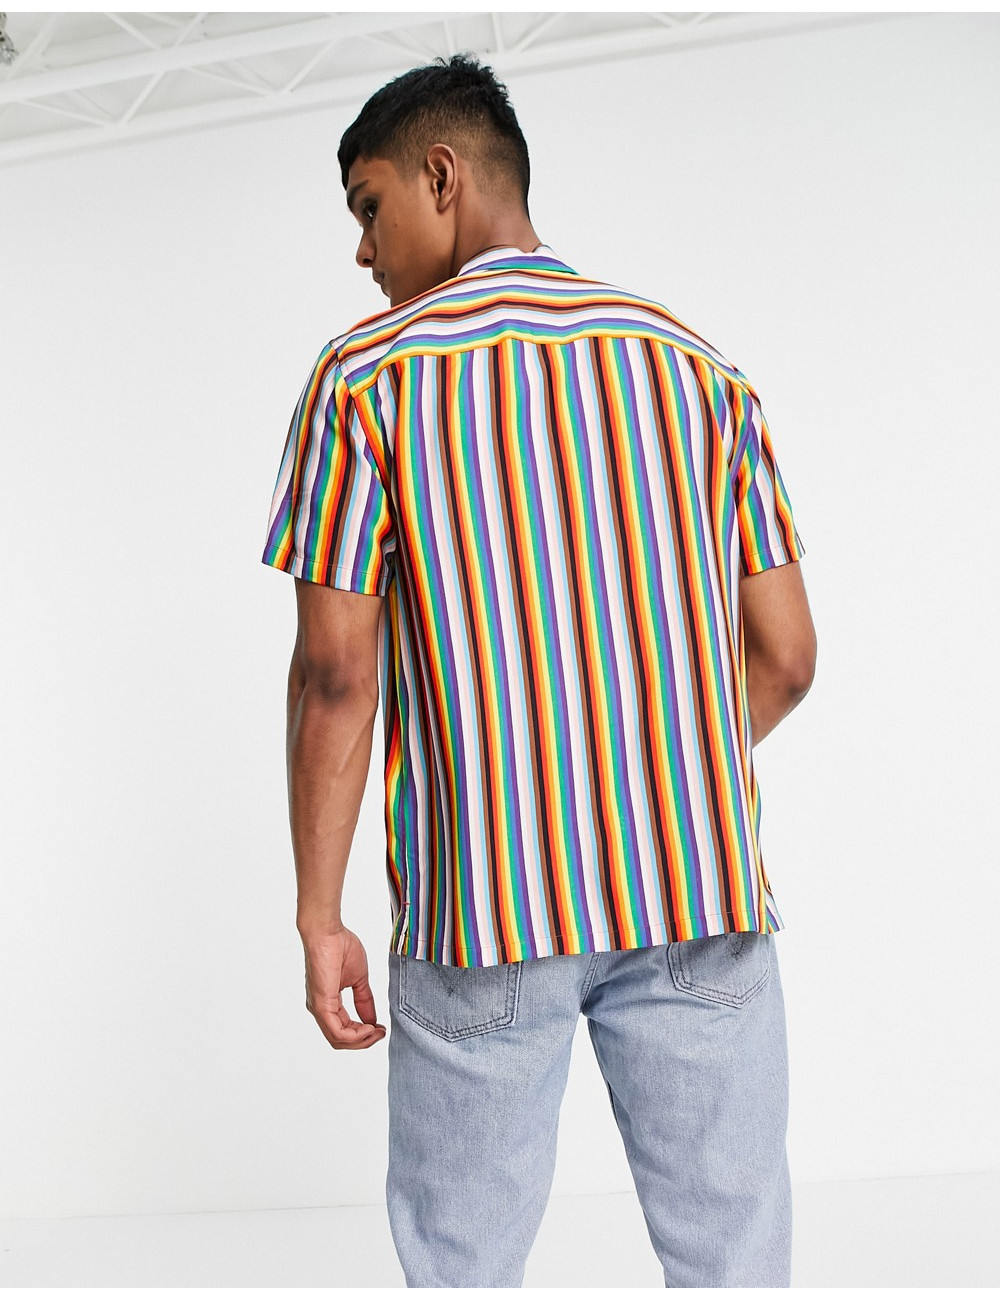 Topman stripe shirt in muli